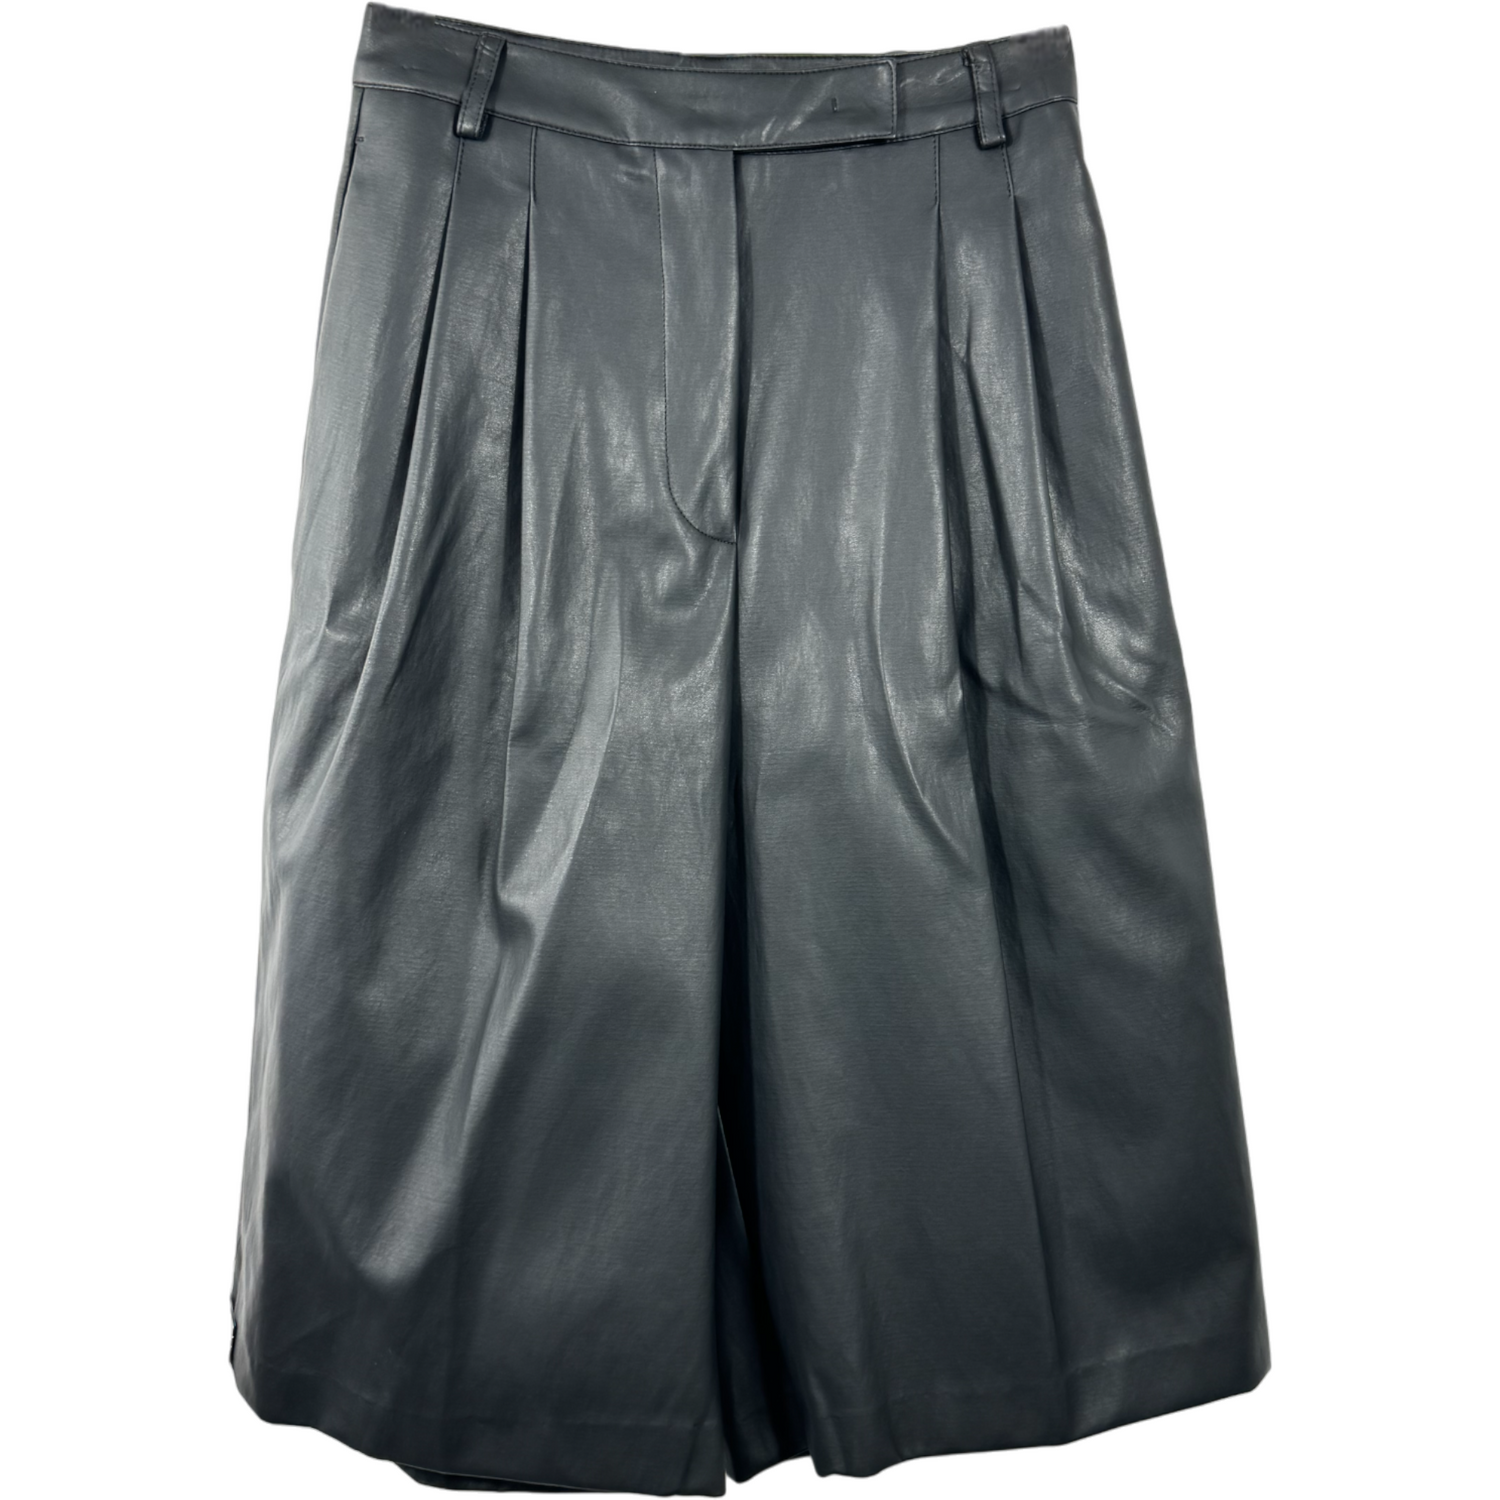 THE FRANKIE SHOP Black Faux Leather Long Shorts